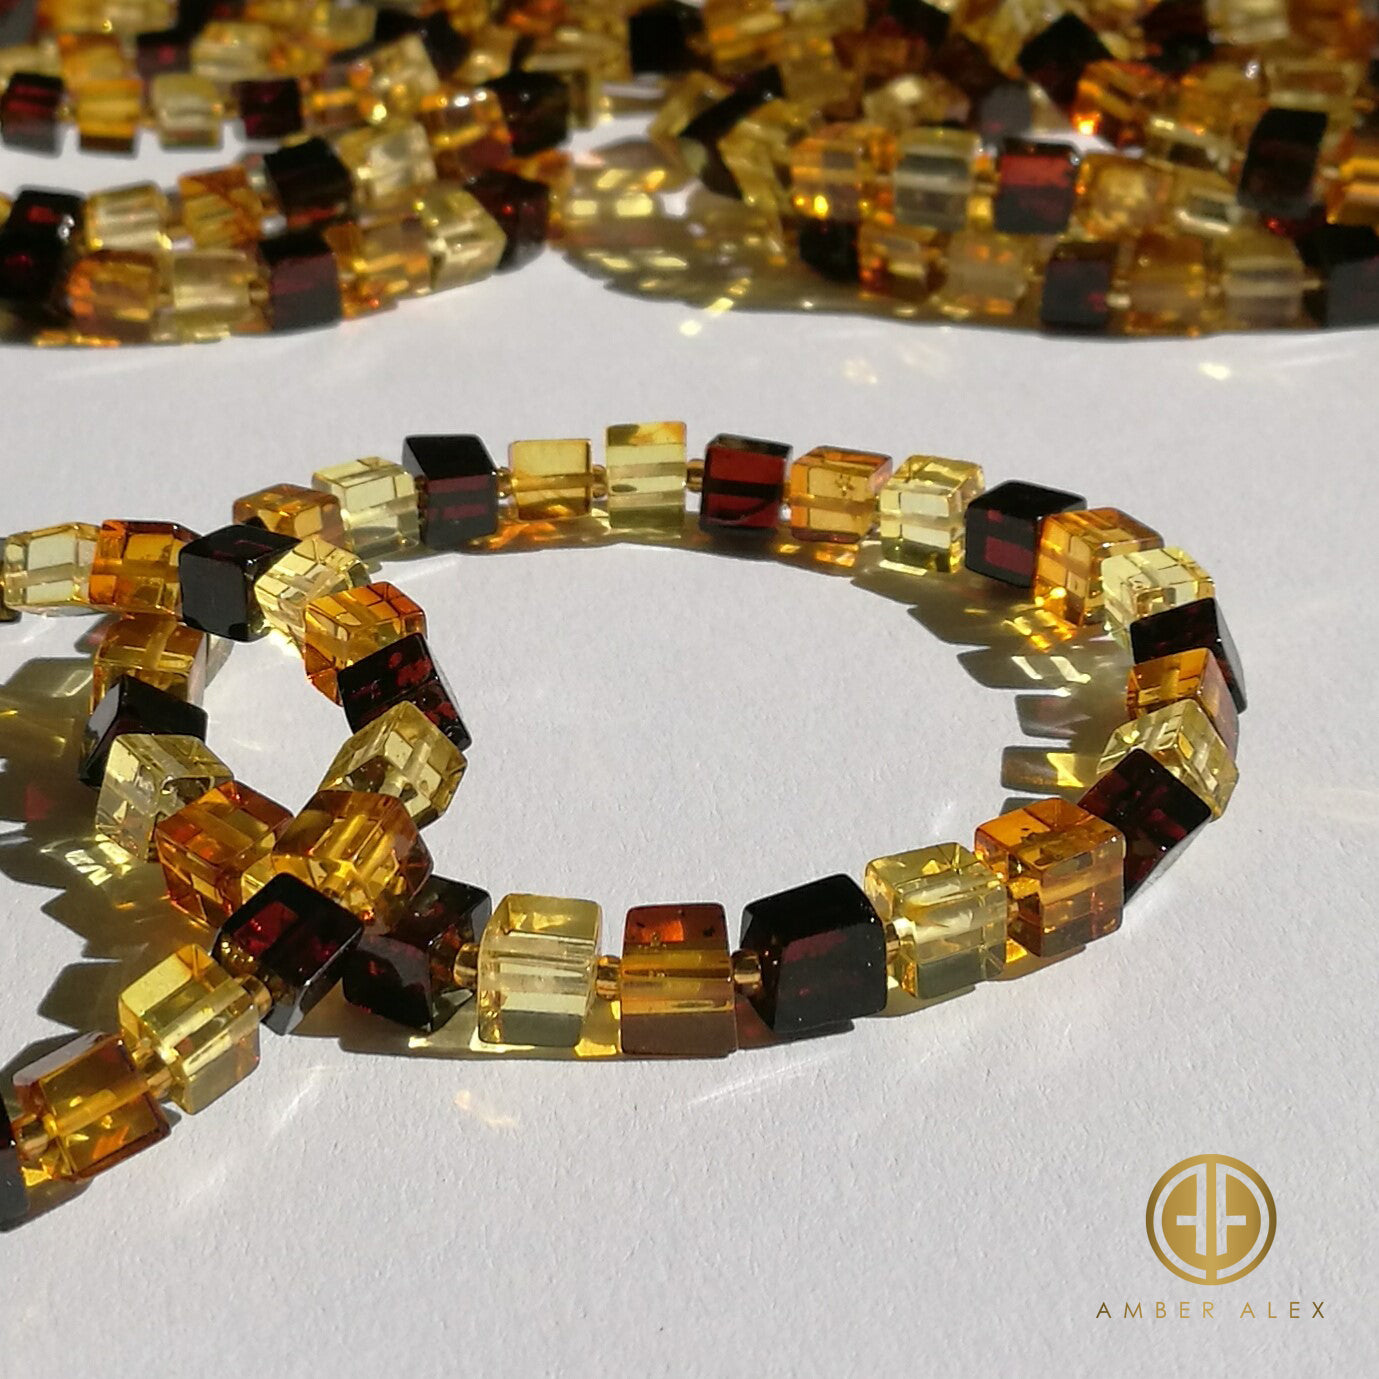 Multi-Color Amber Cube Beads Stretch Bracelet